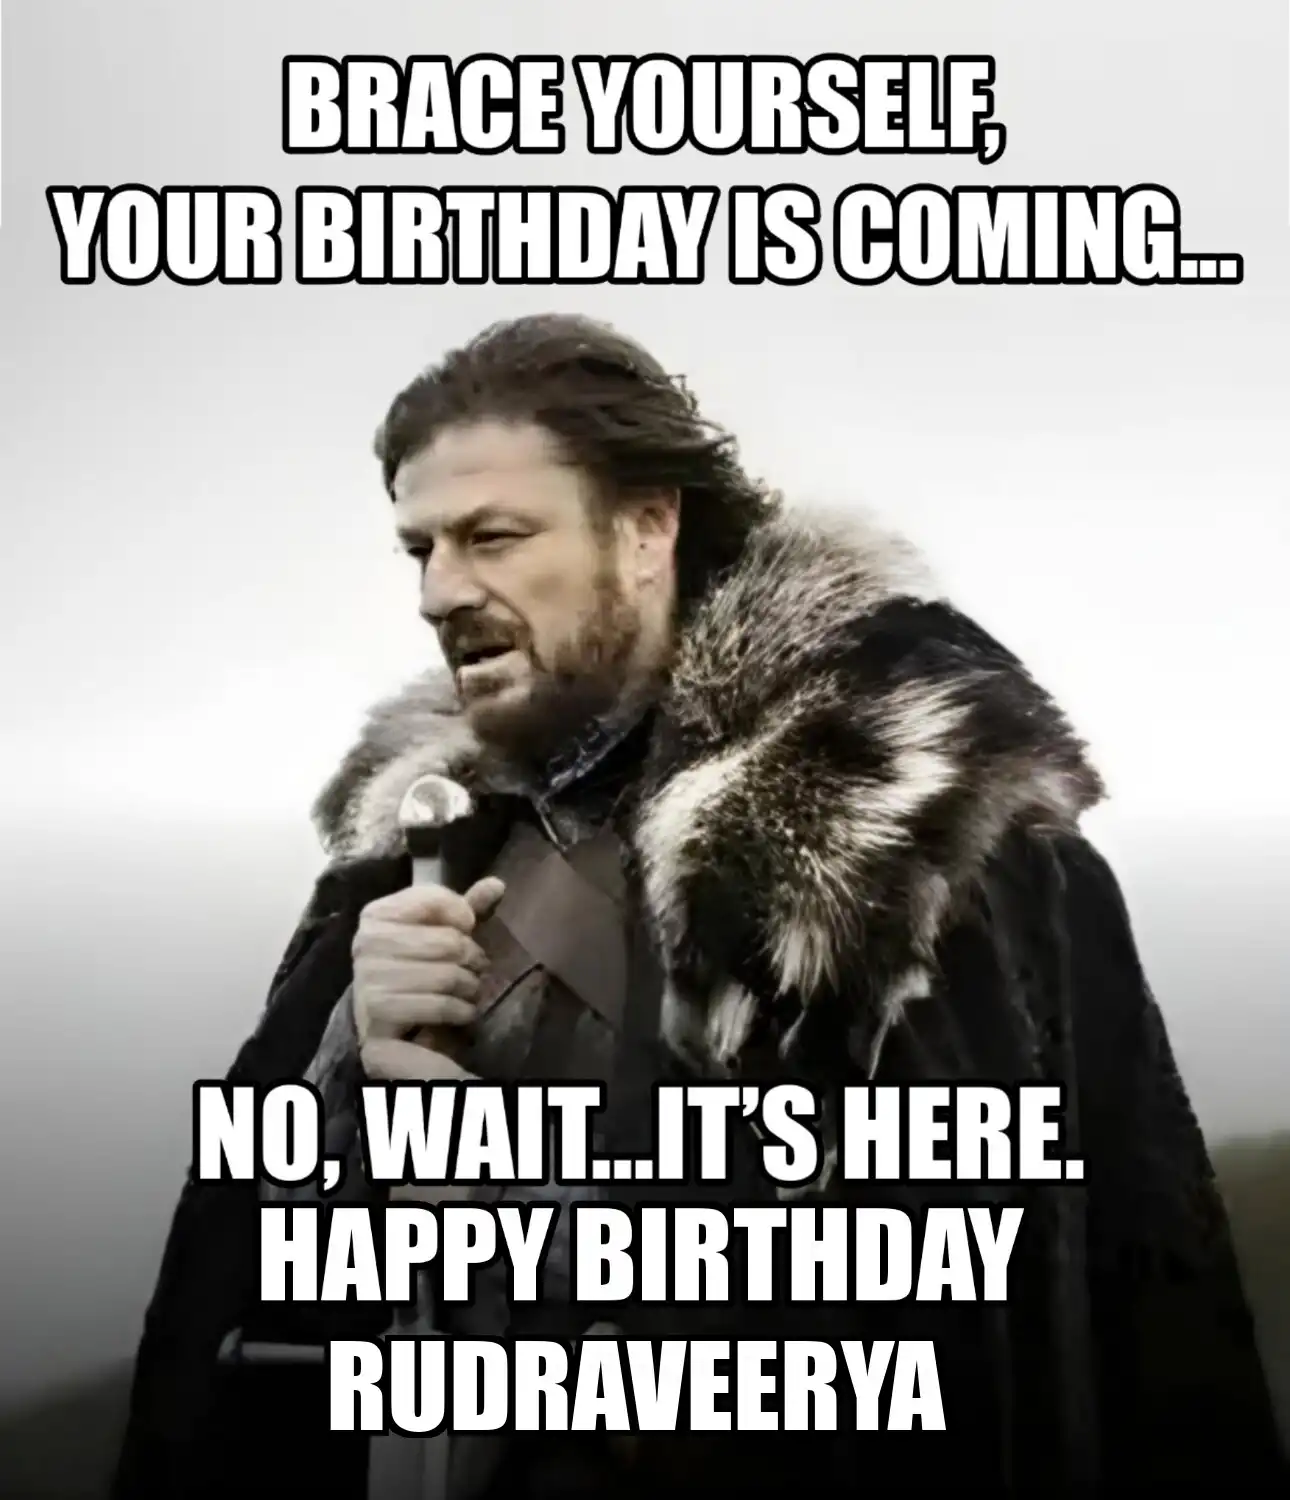 Happy Birthday Rudraveerya Brace Yourself Your Birthday Is Coming Meme